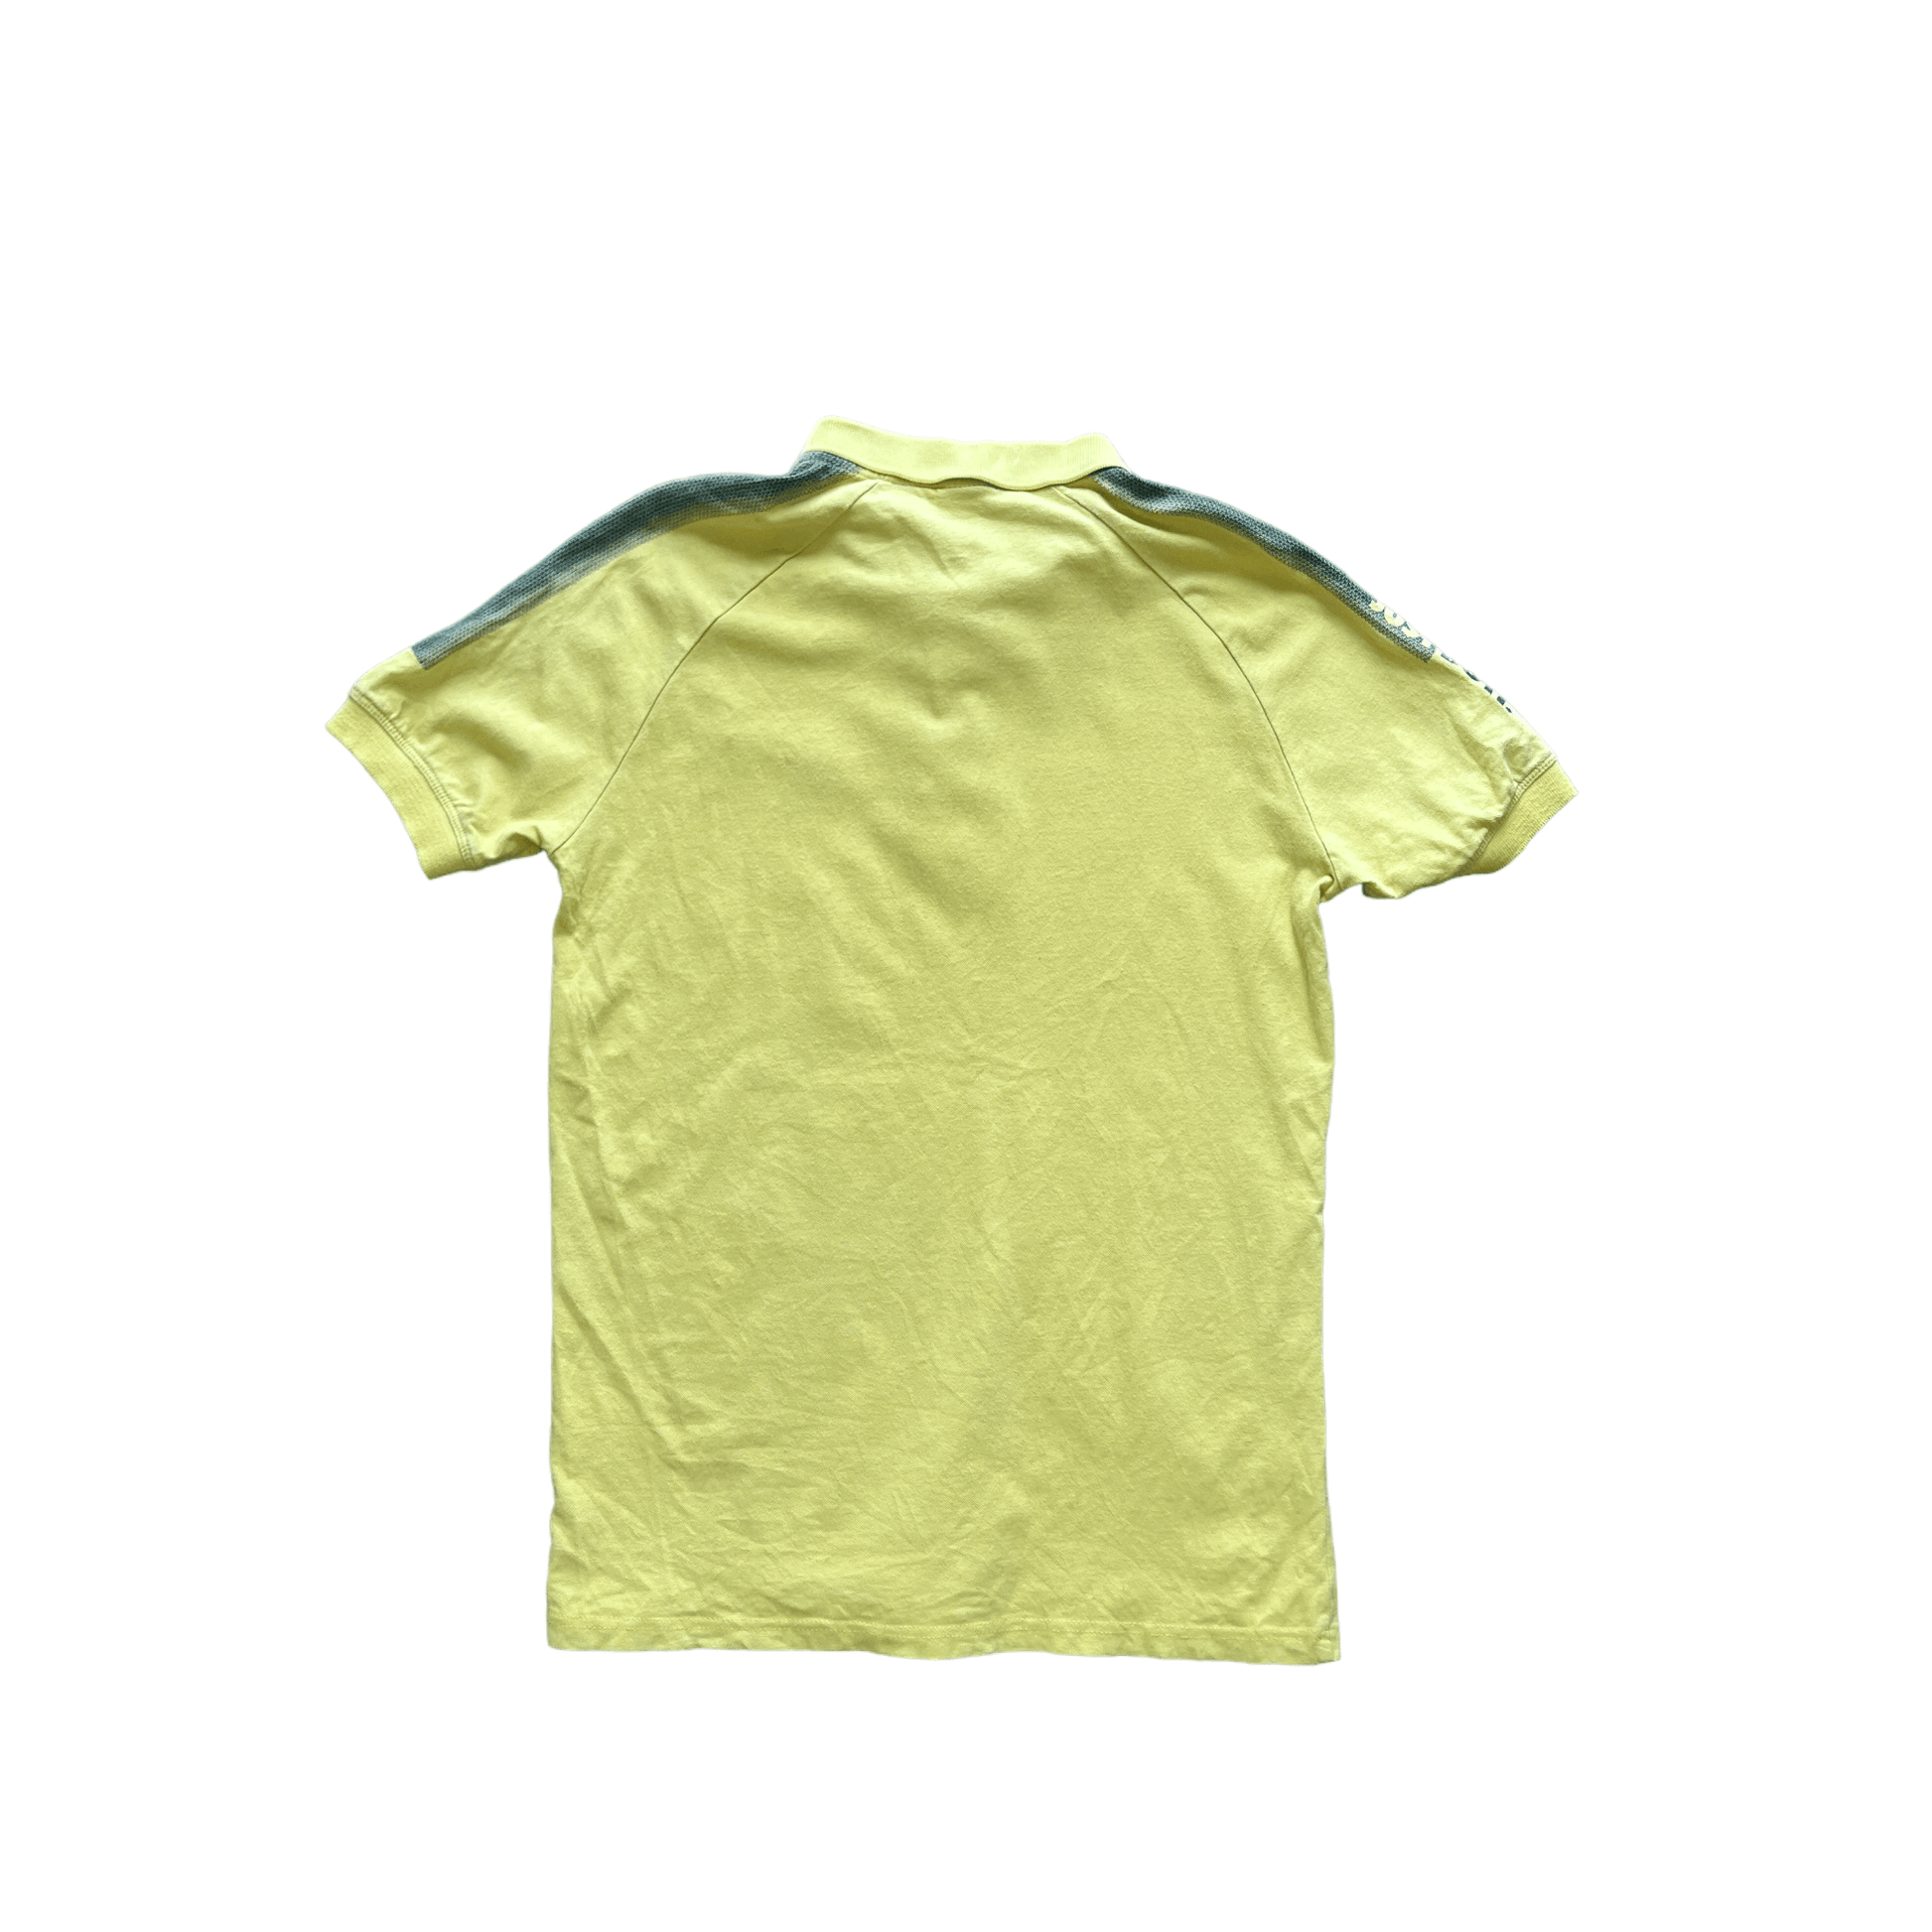 Vintage 90s Yellow Nike Polo Shirt - Small - The Streetwear Studio